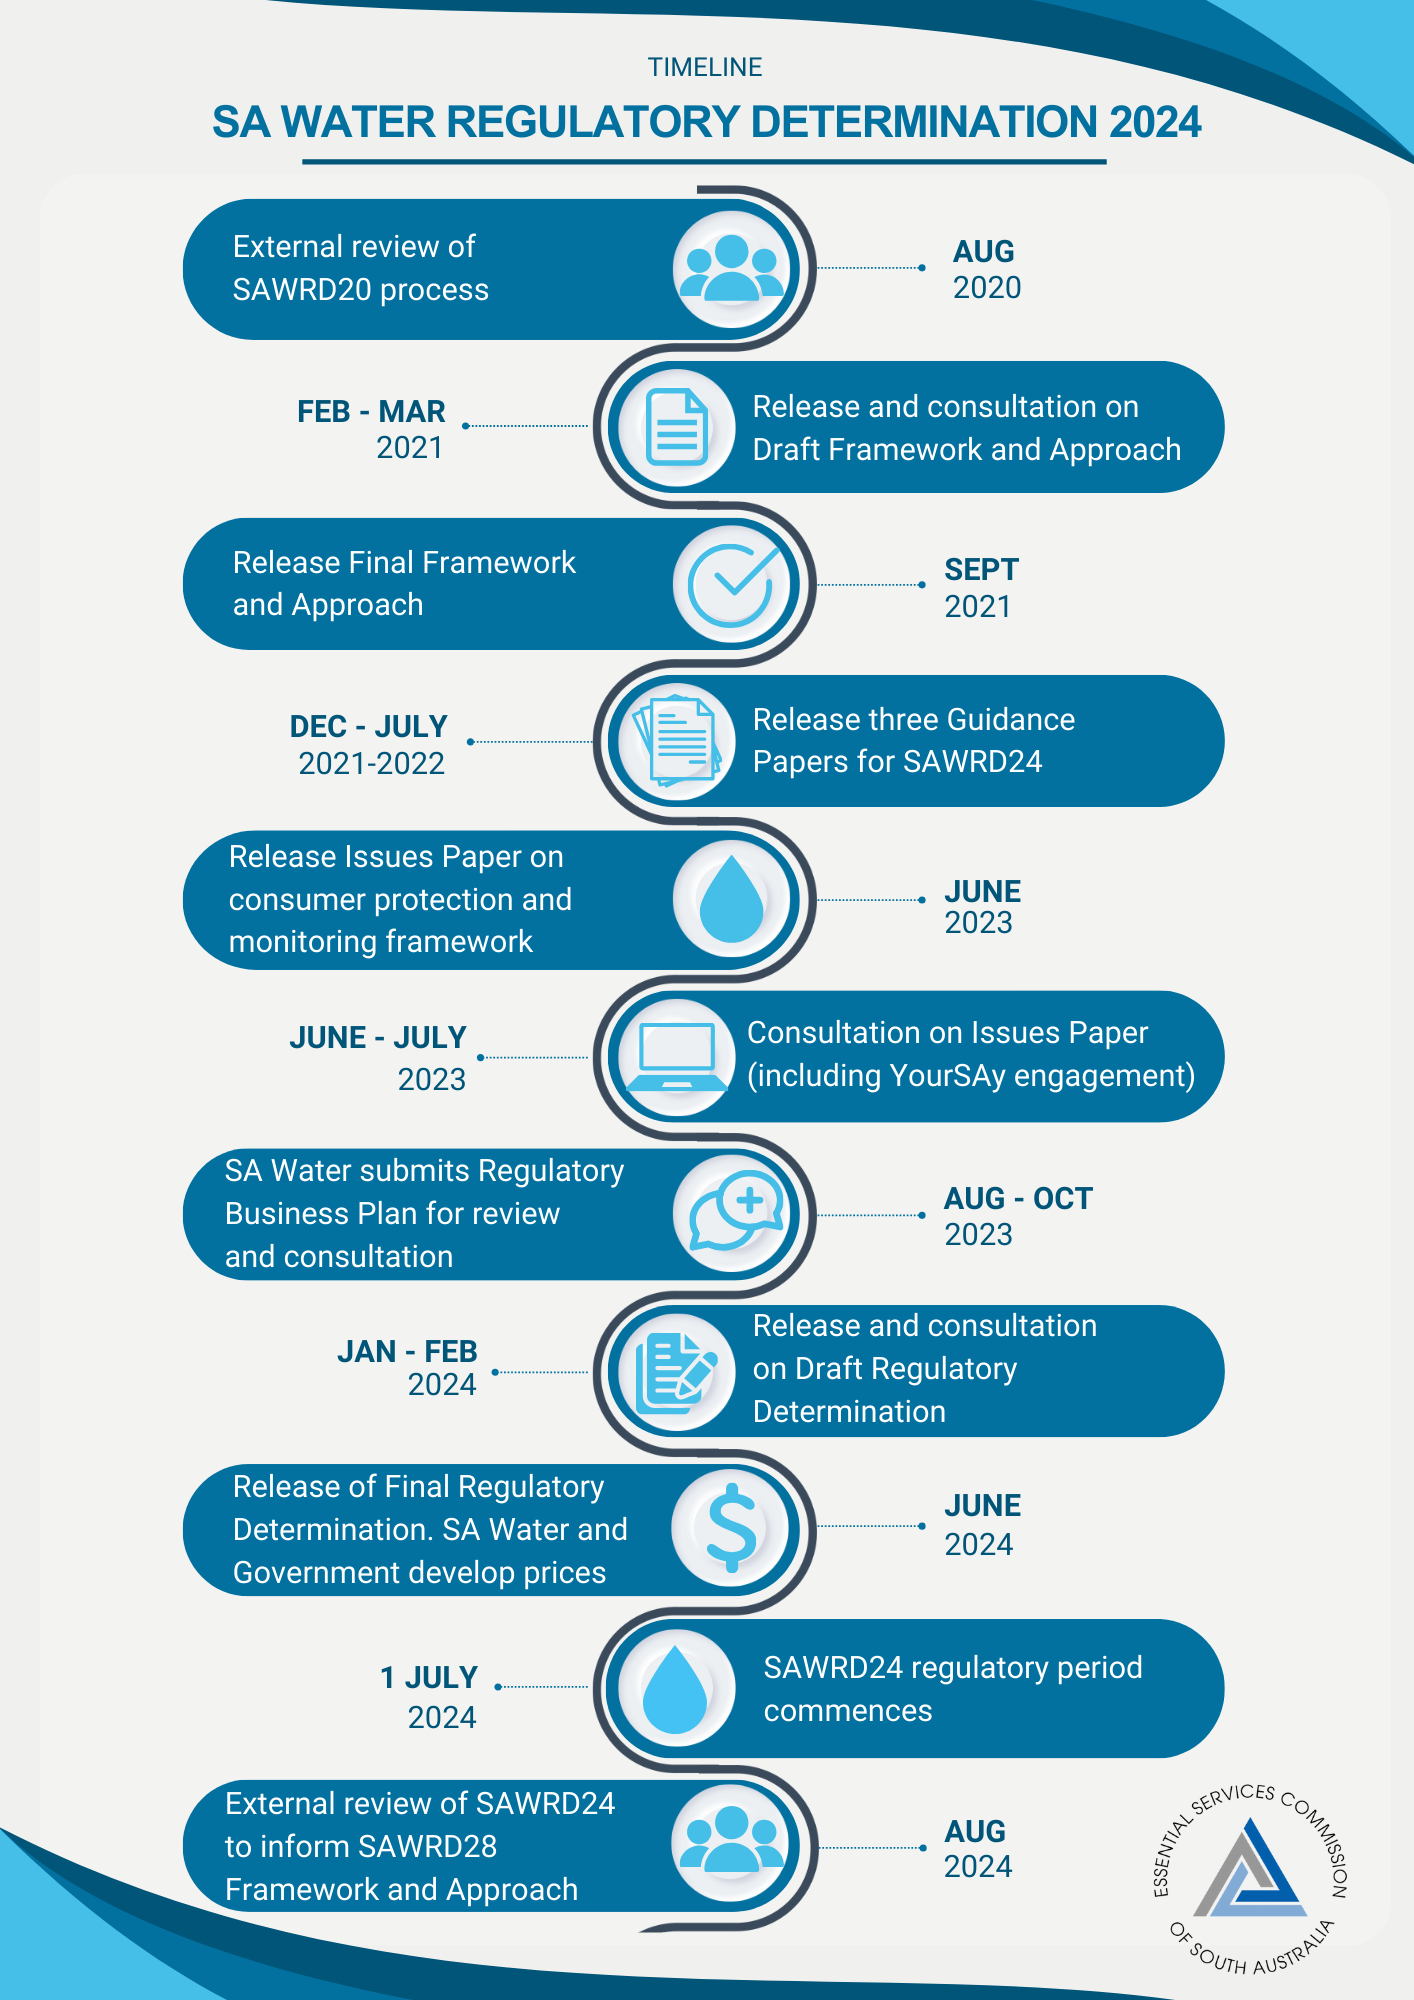 SAWRD24 Timeline Infographic